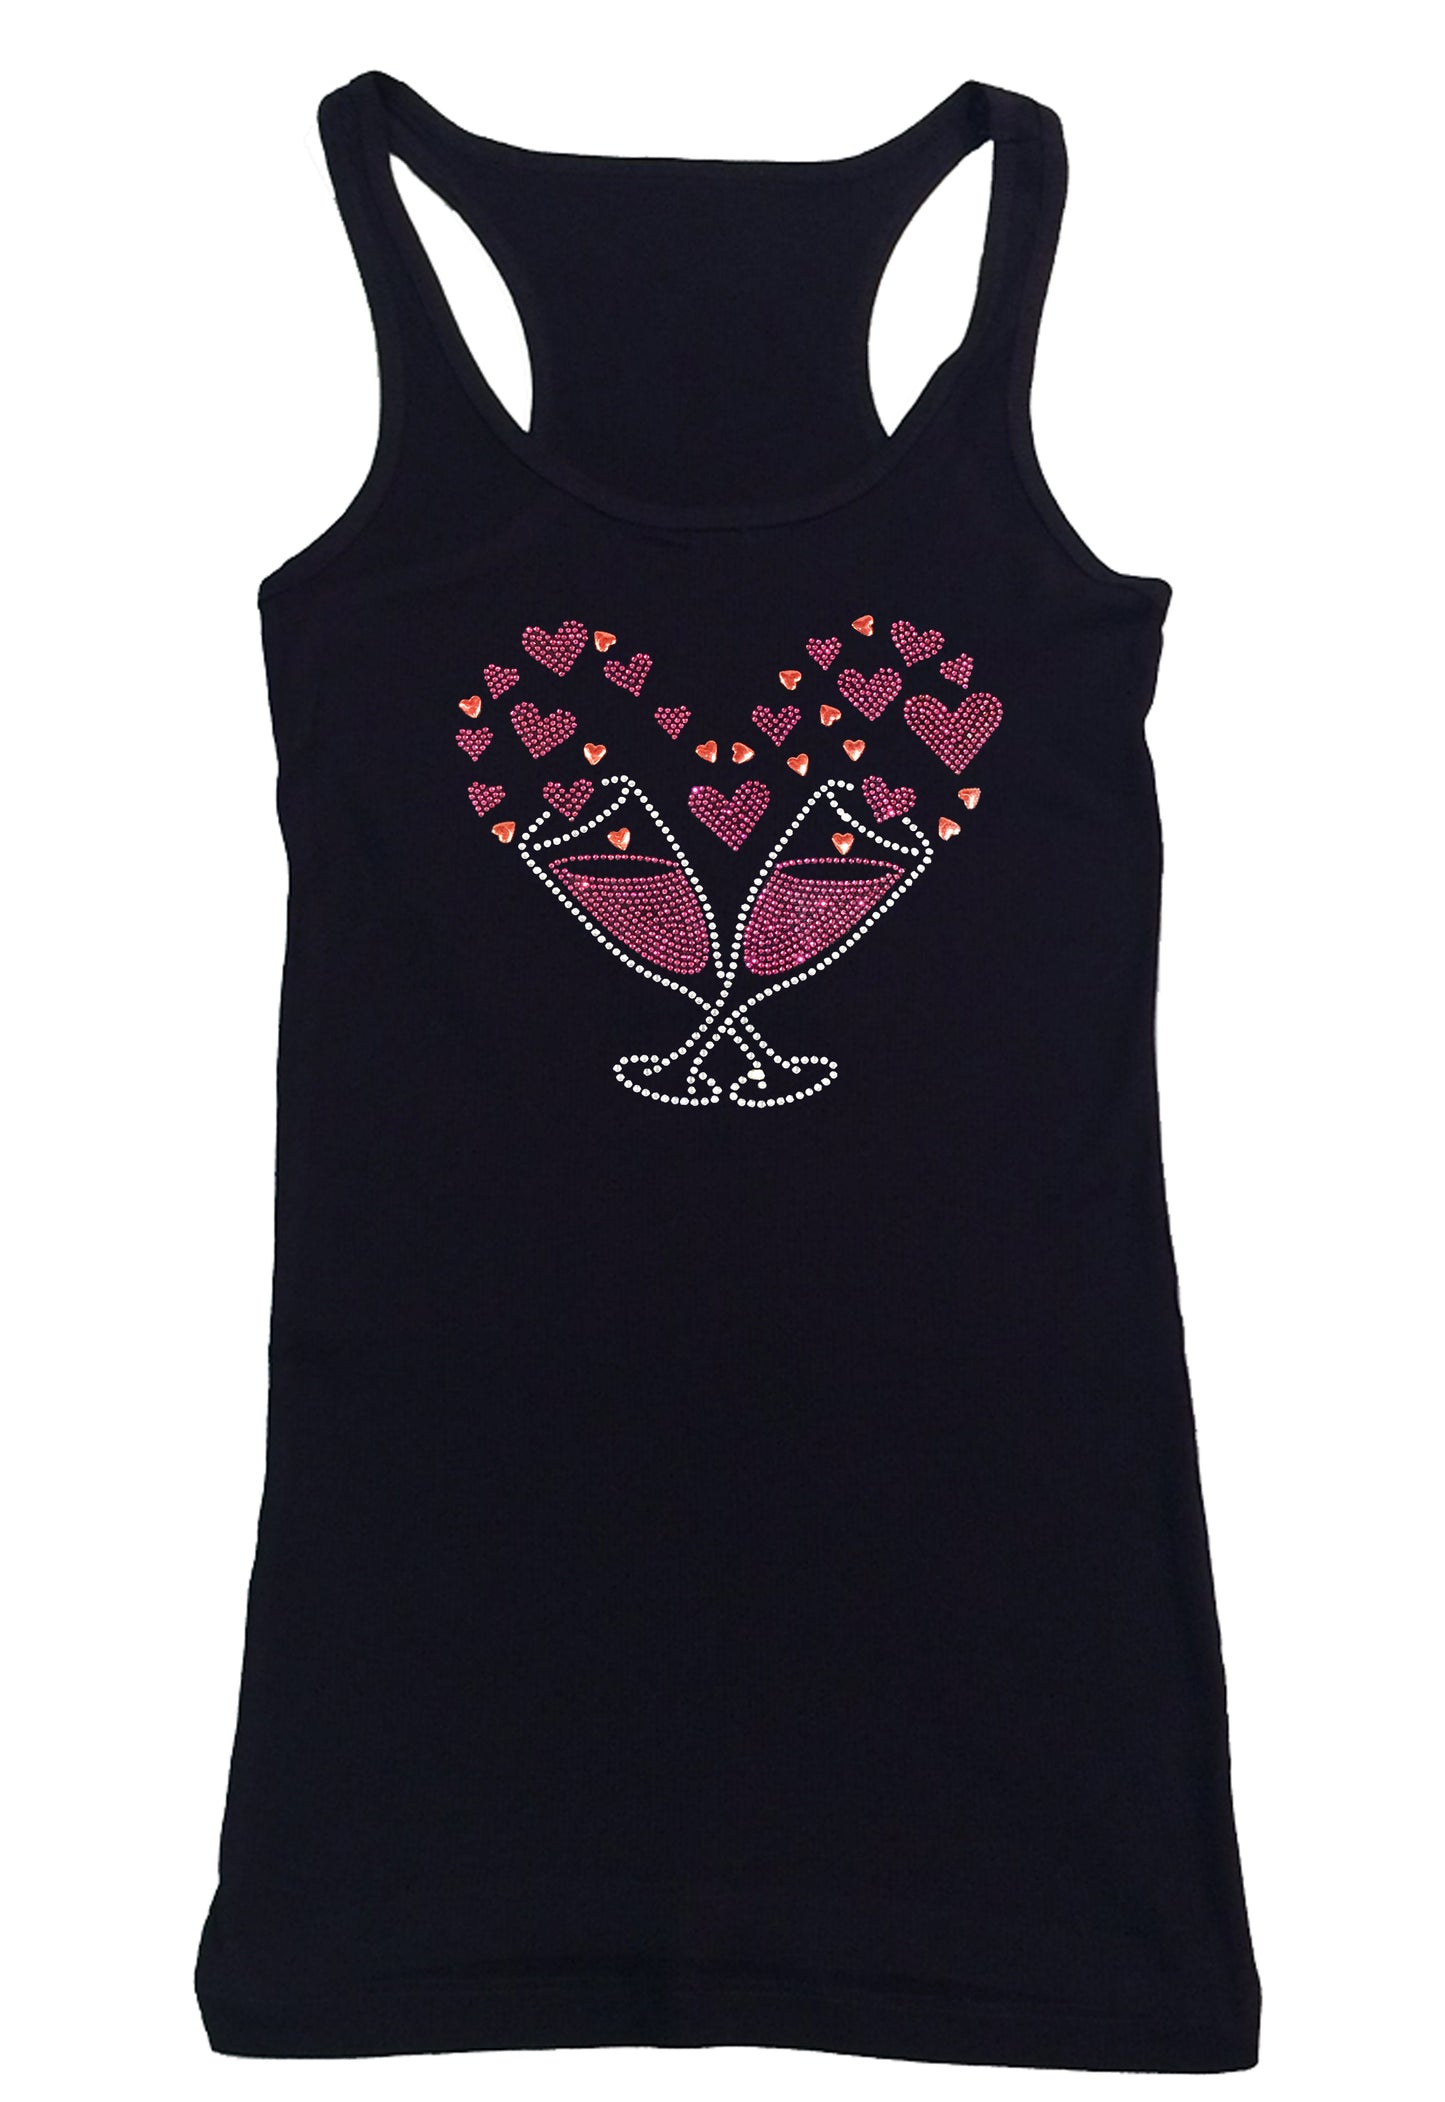 Womens T-shirt with Wine Glasses Heart in Rhinestones